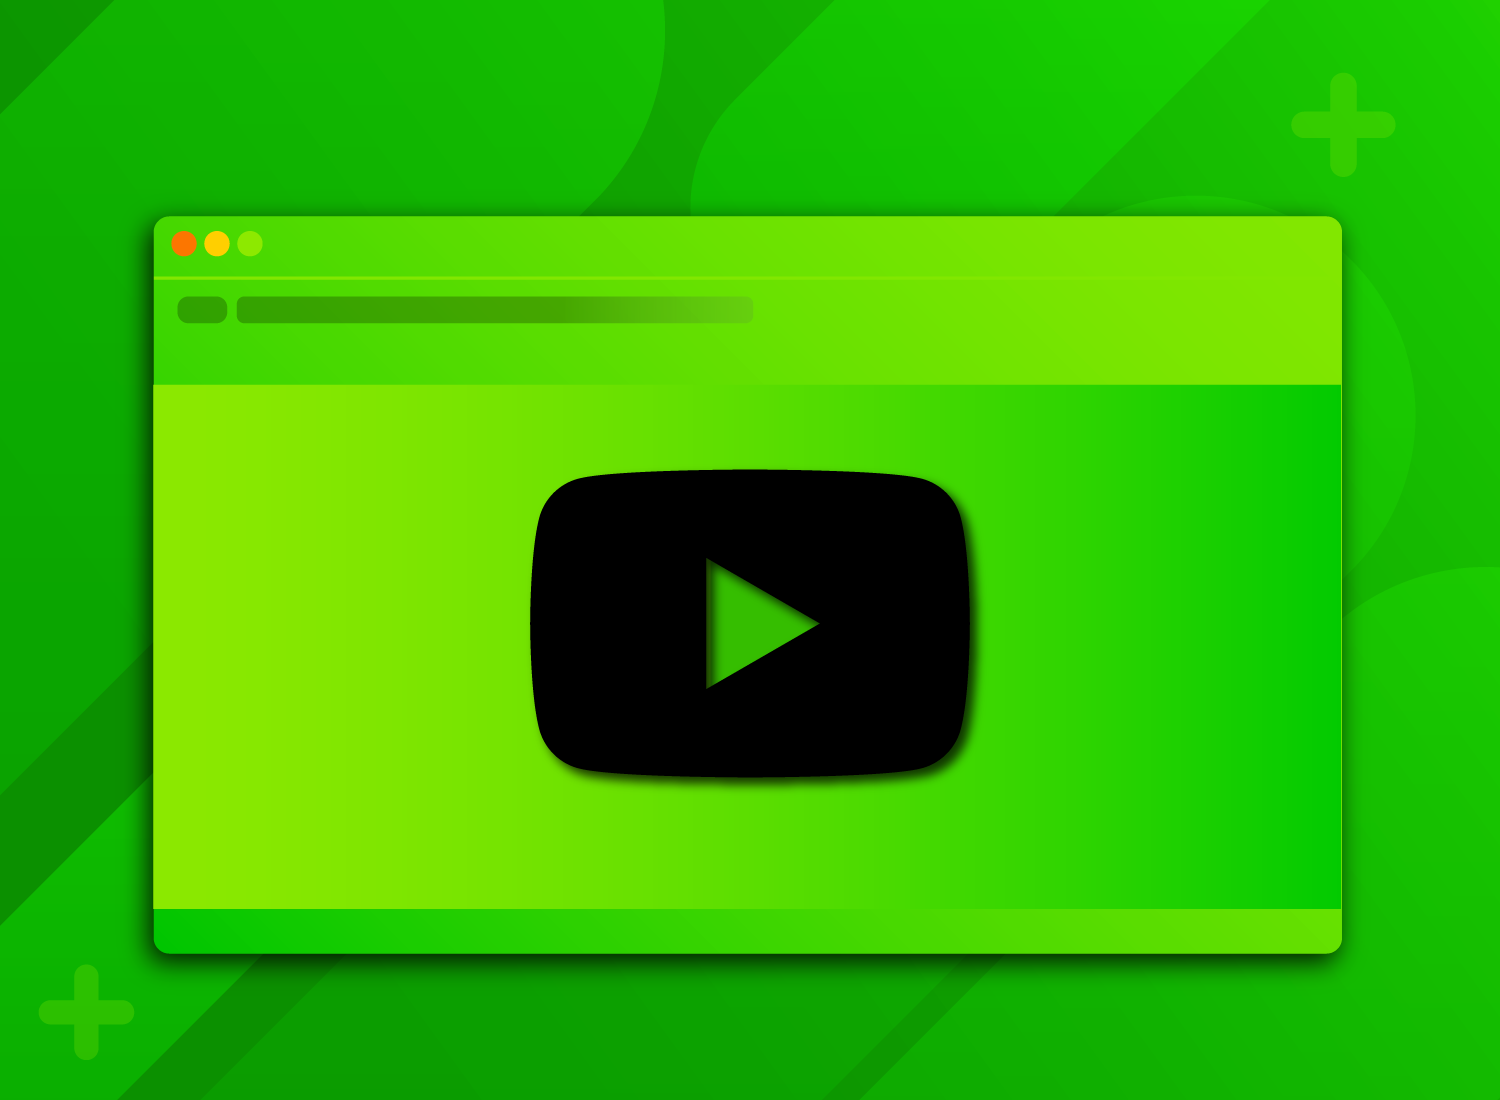 YouTube golden logo green screen - YouTube